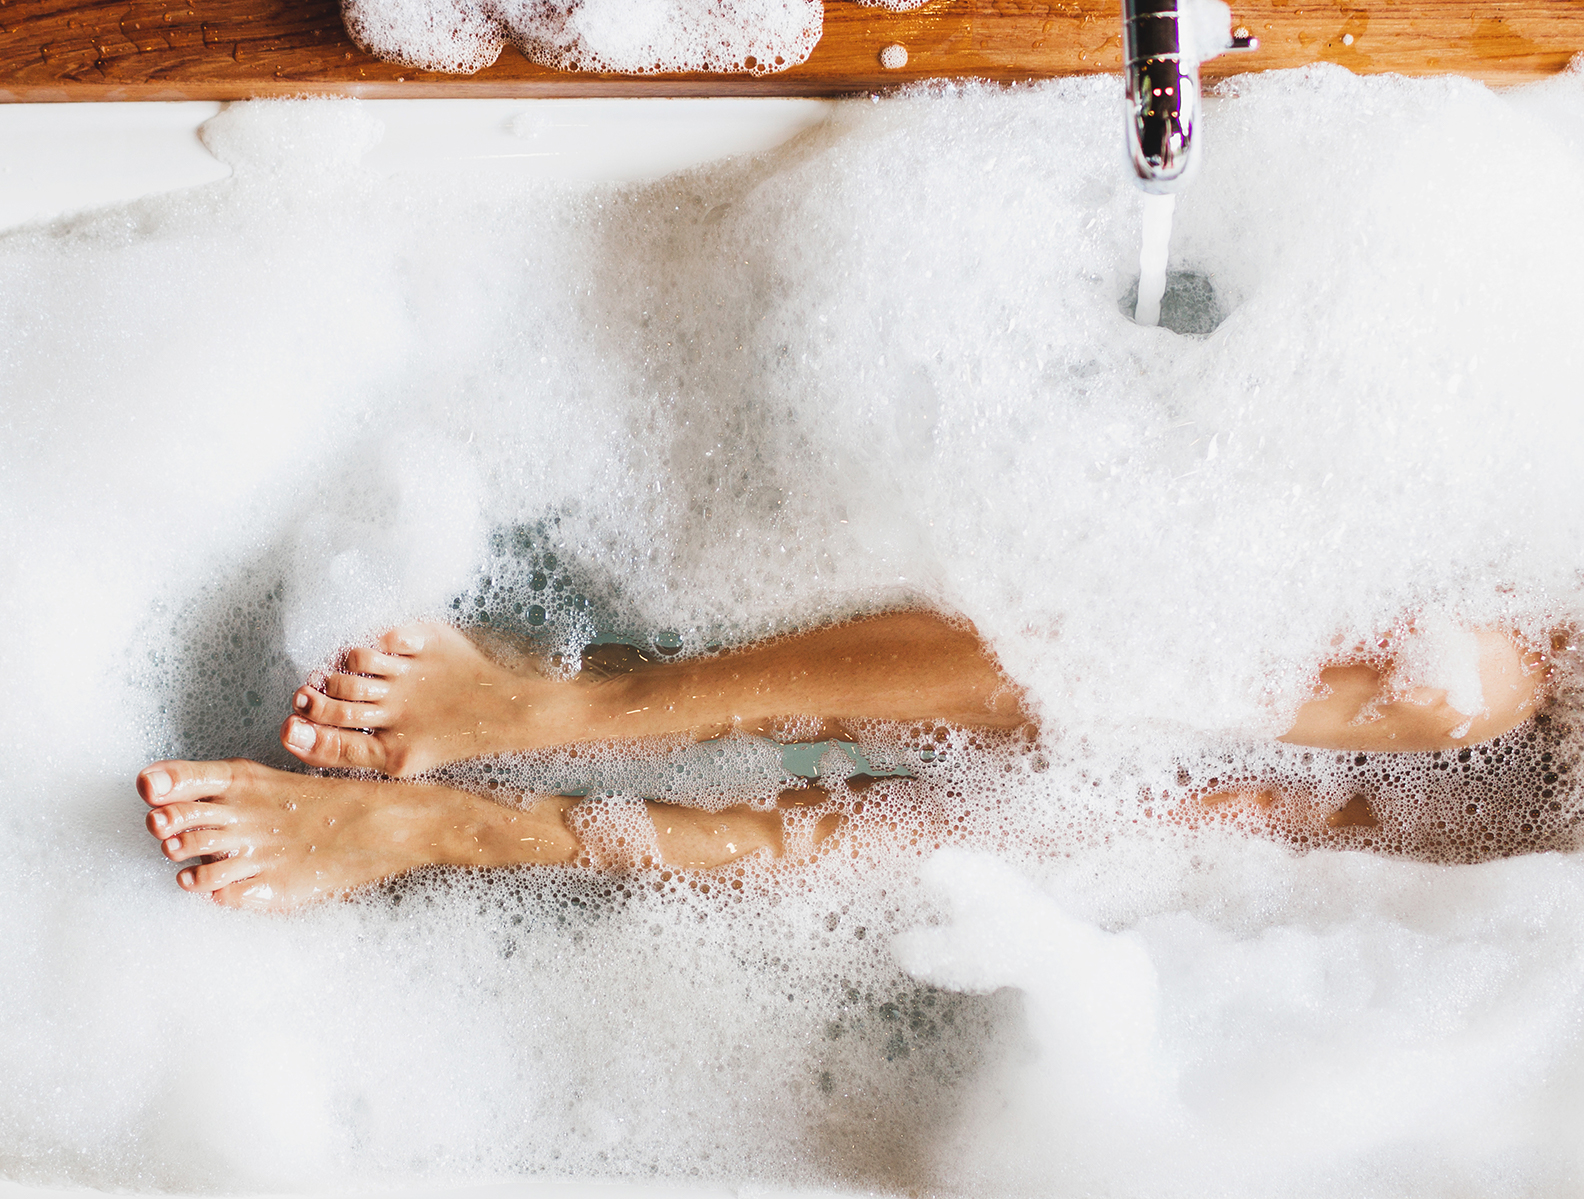 Female's feet in a bubble bath